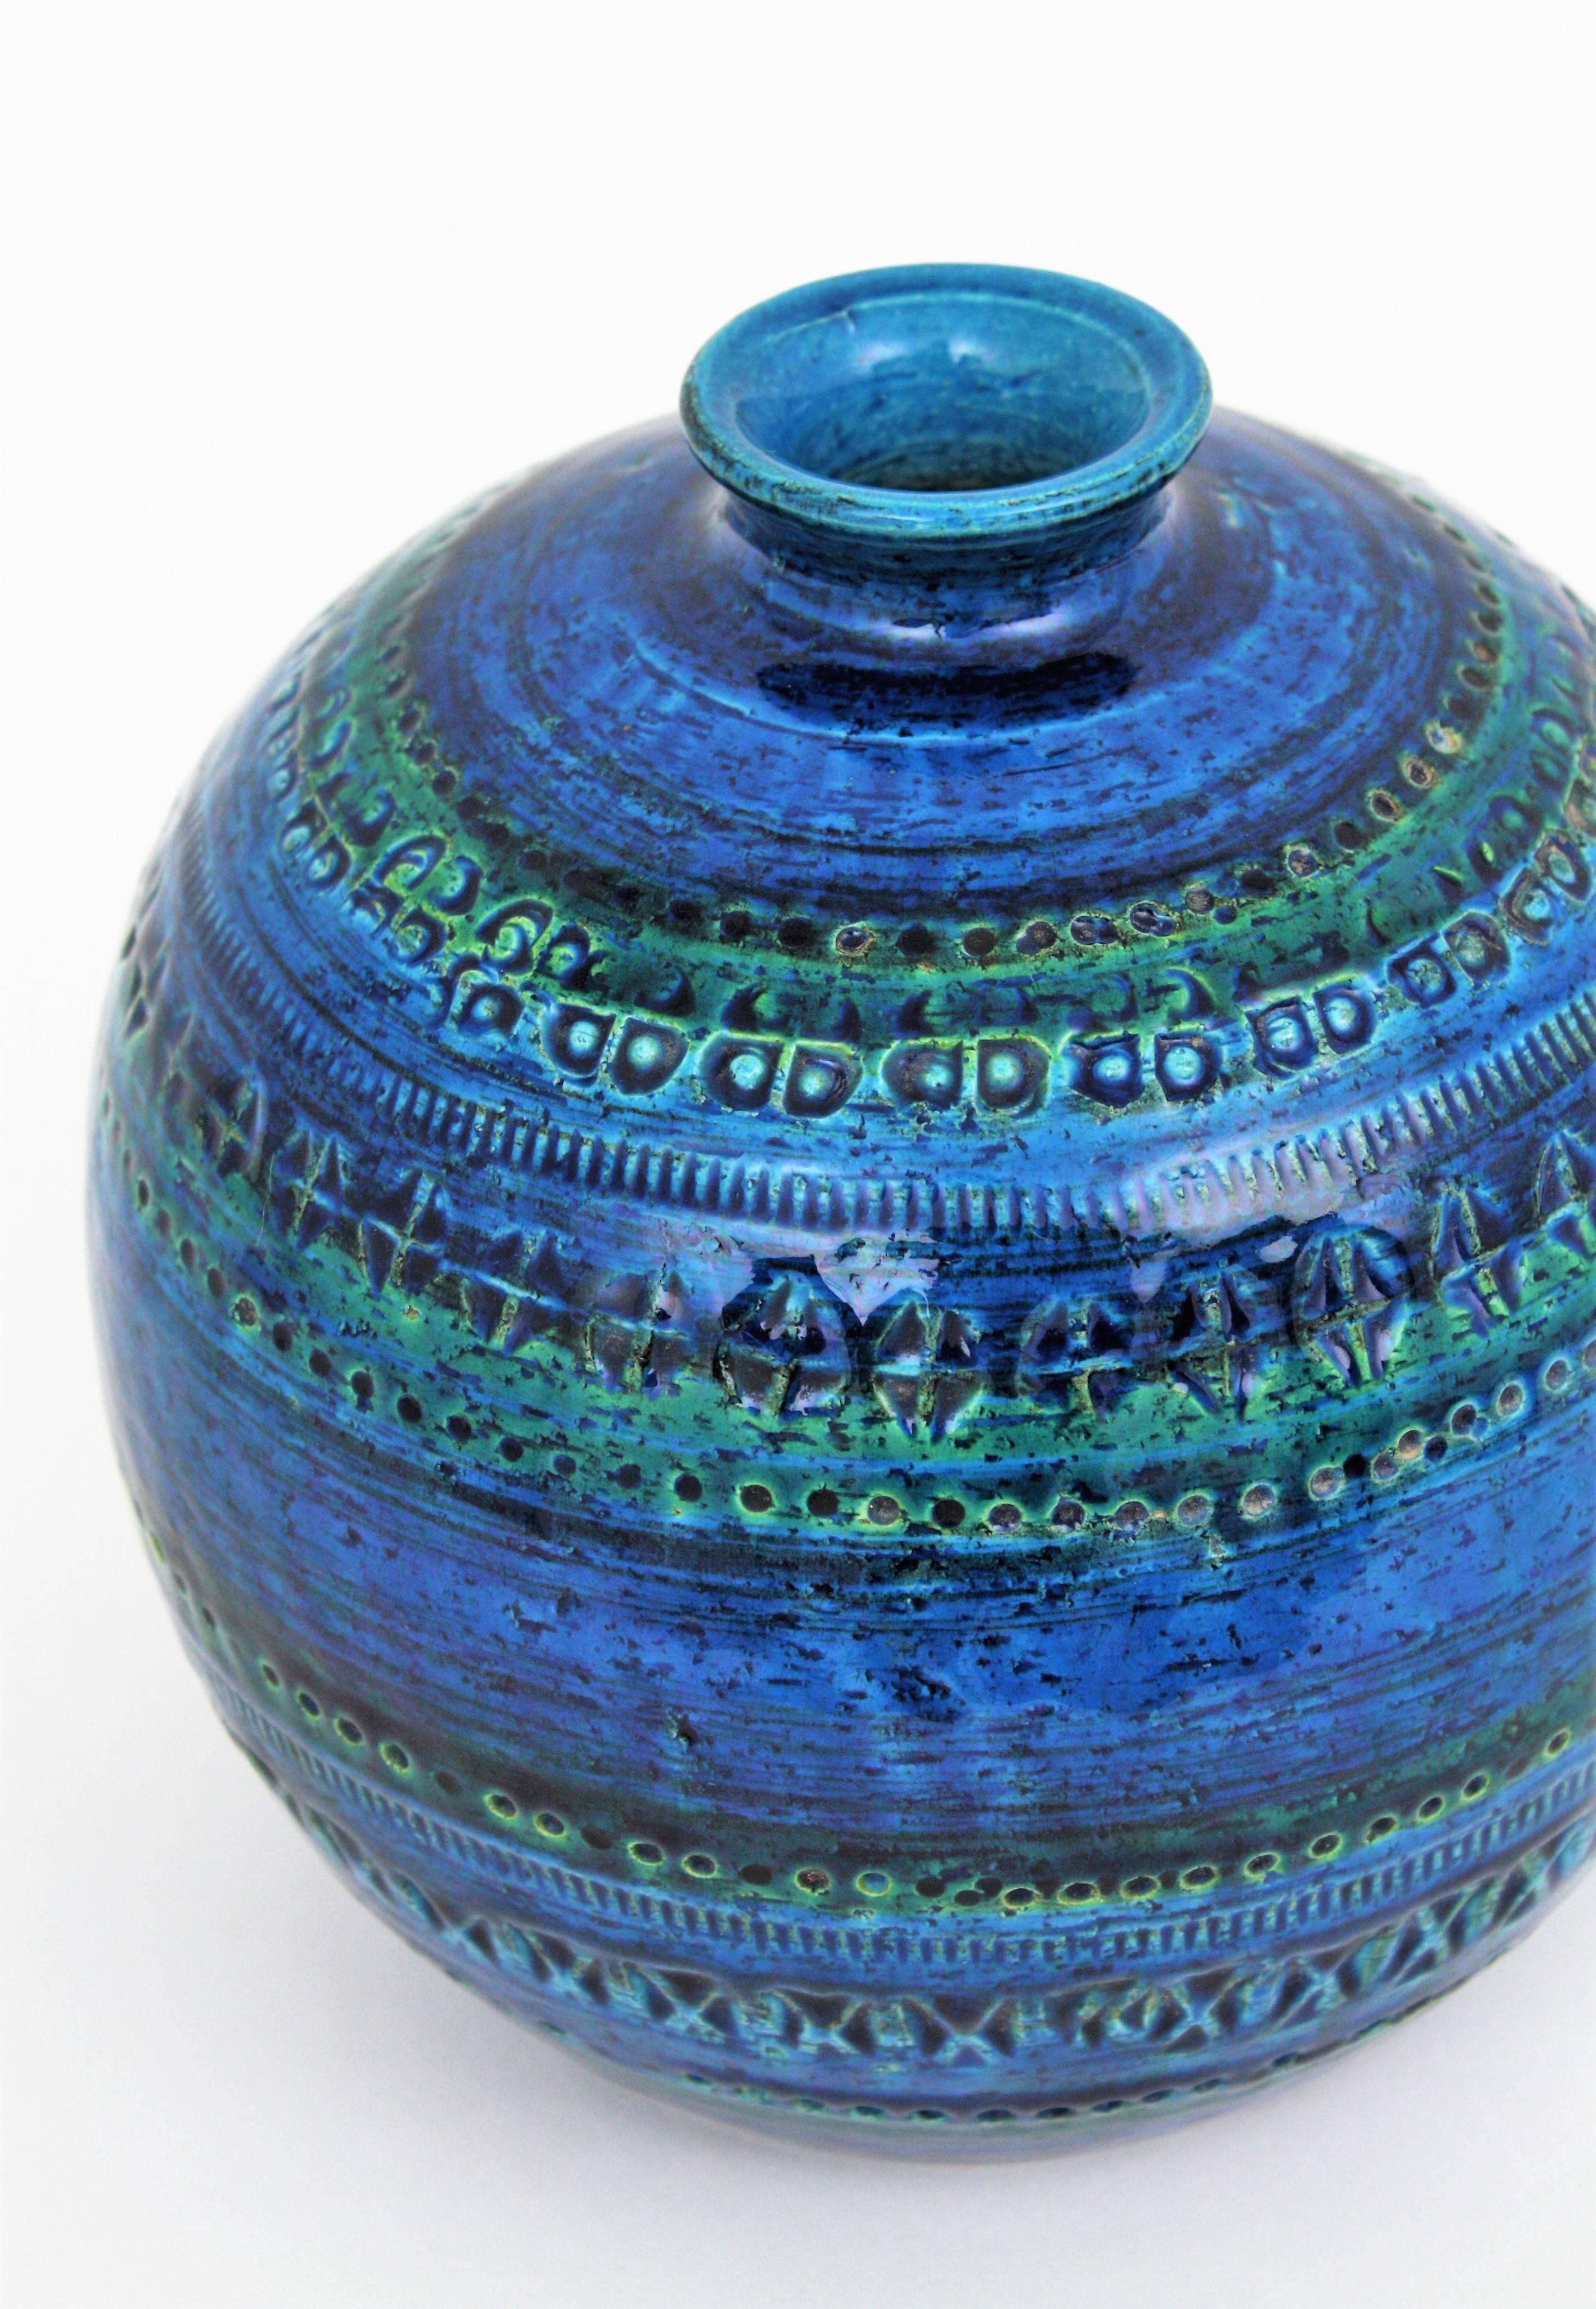 1960er Jahre Aldo Londi für Bitossi Rimini Blau glasierte Keramik Große Runde Vase (20. Jahrhundert)